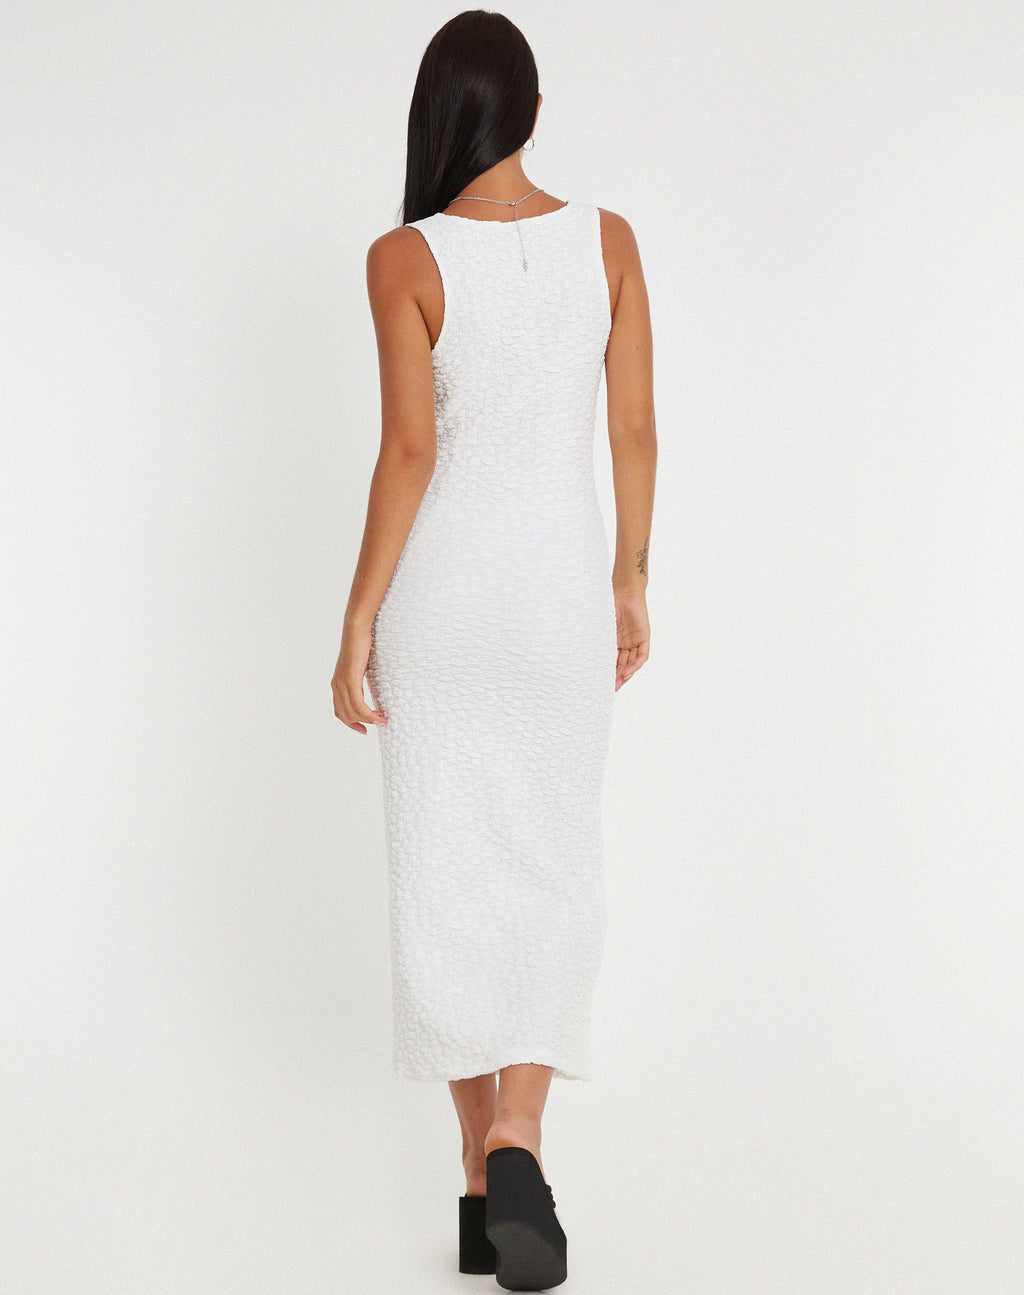 Roski Textured Midi Dress in White